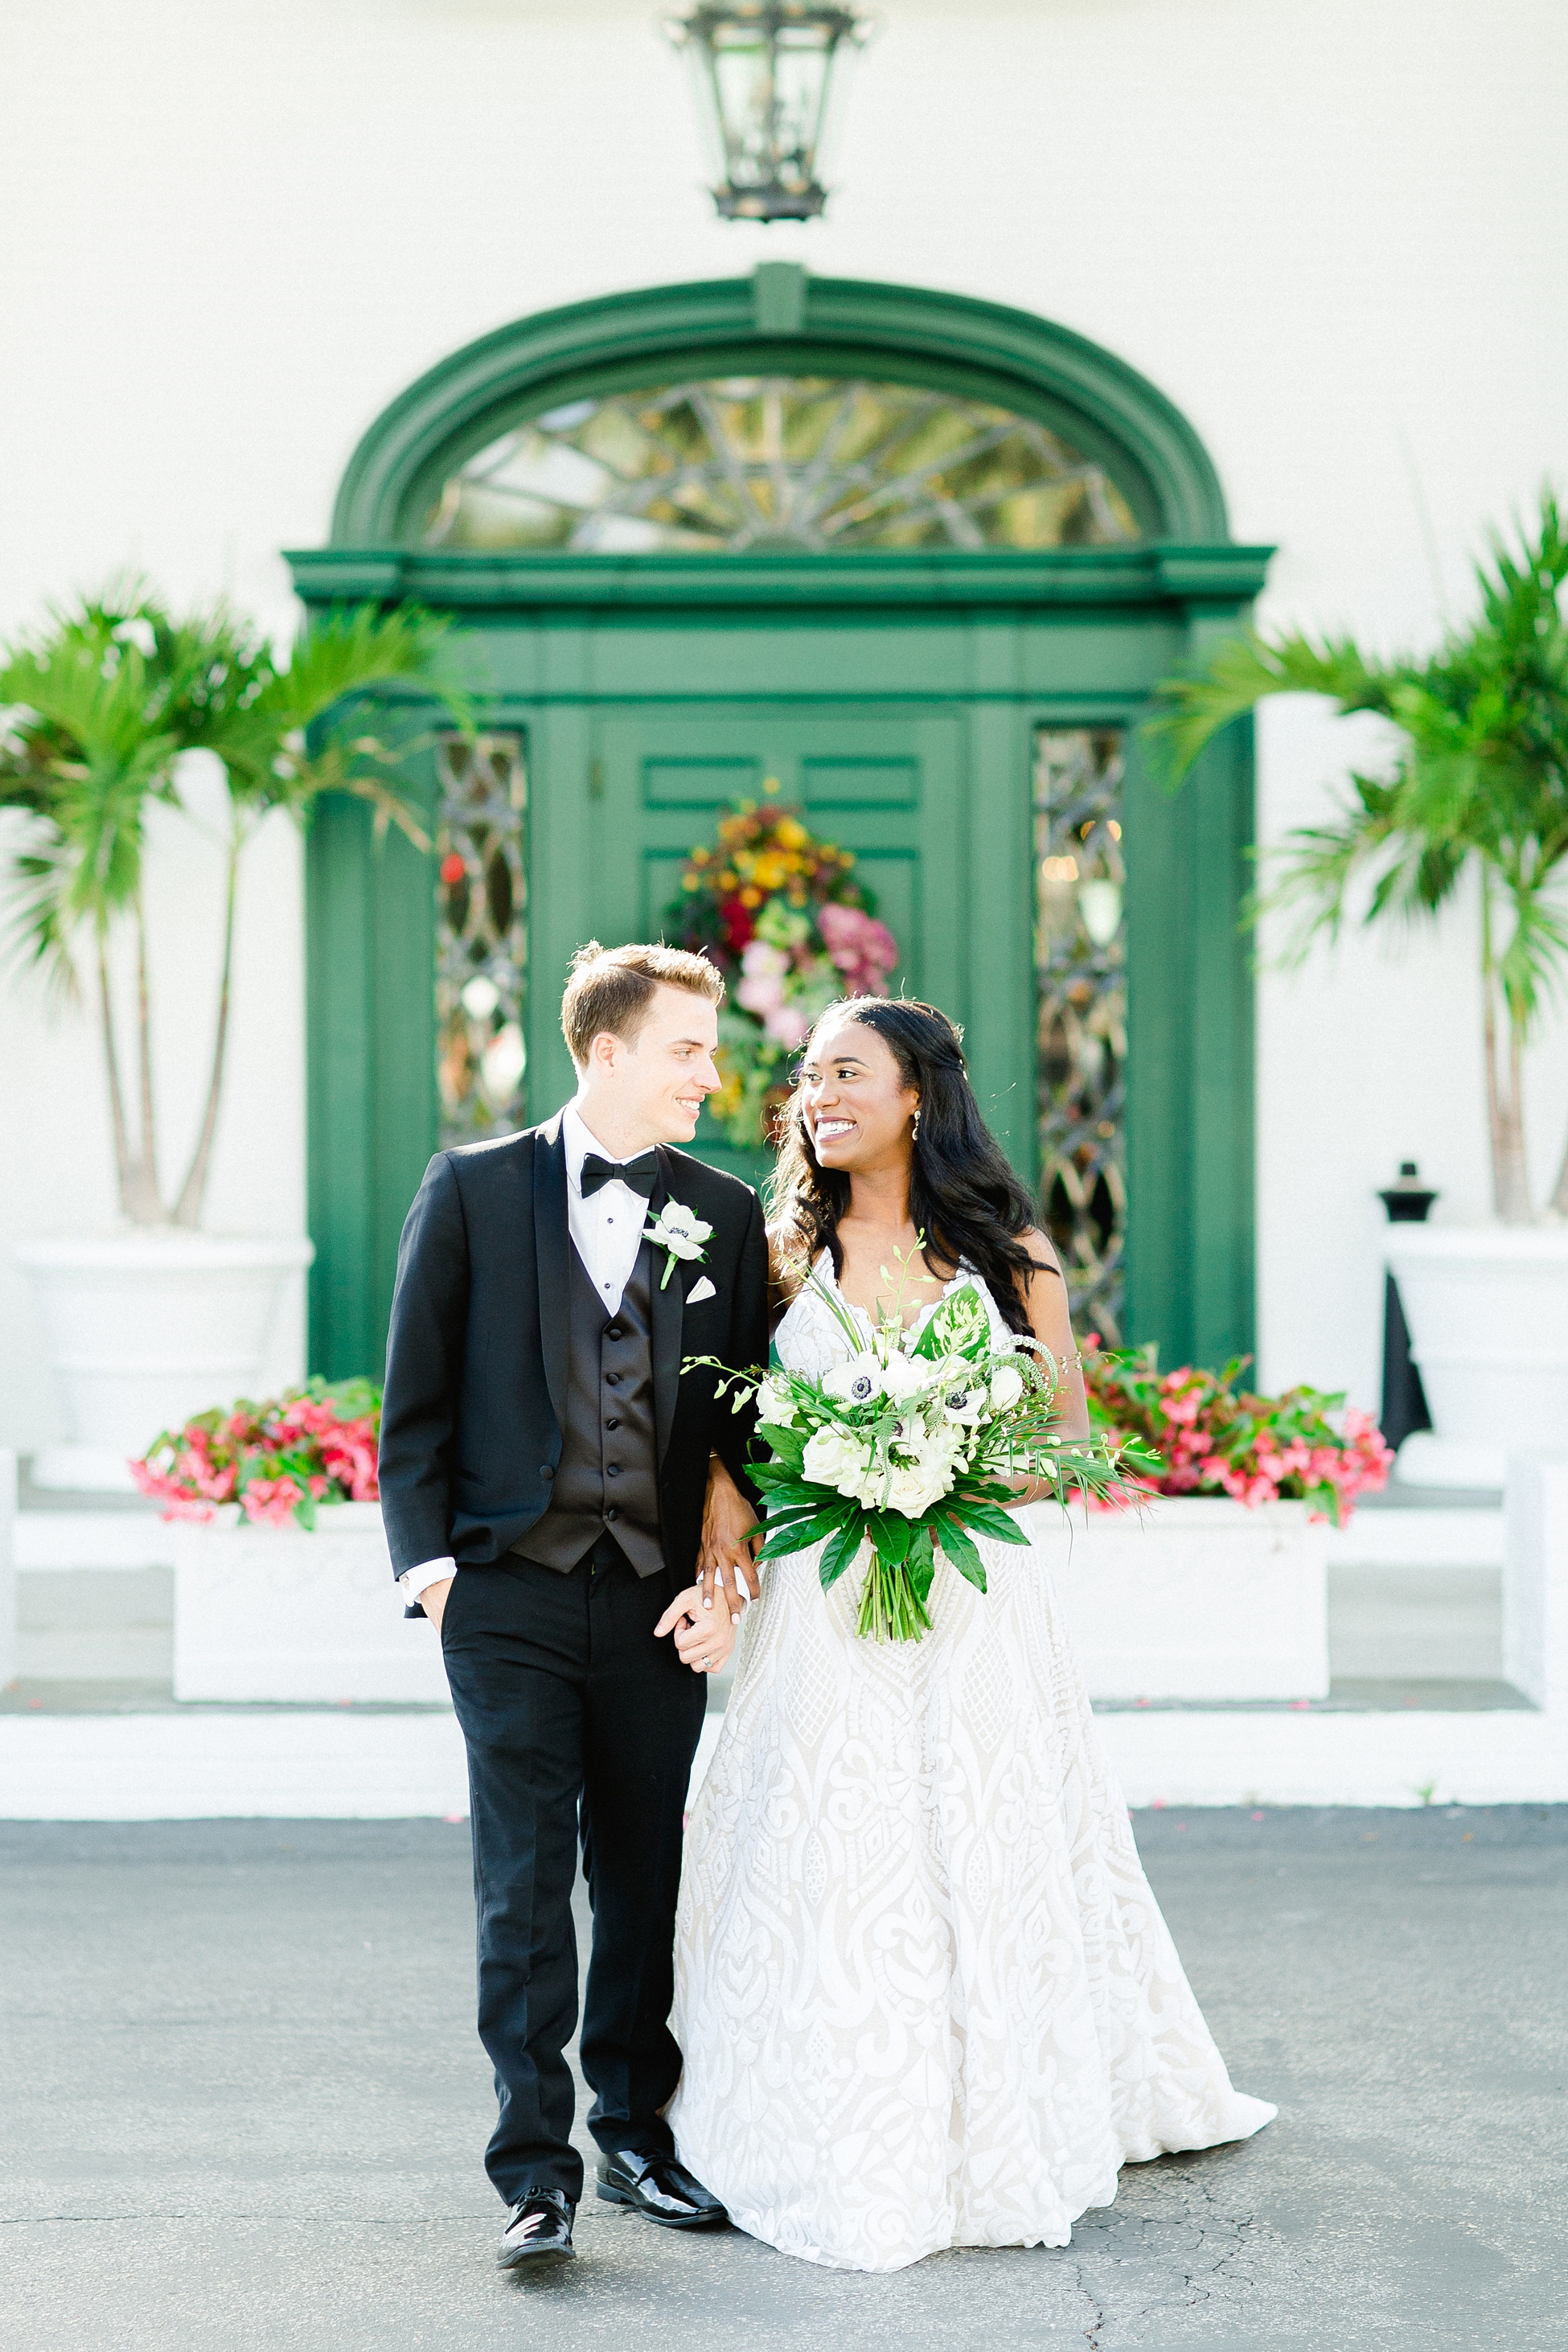 Palma Ceia Wedding Photographer | © Ailyn La Torre Photography 2019